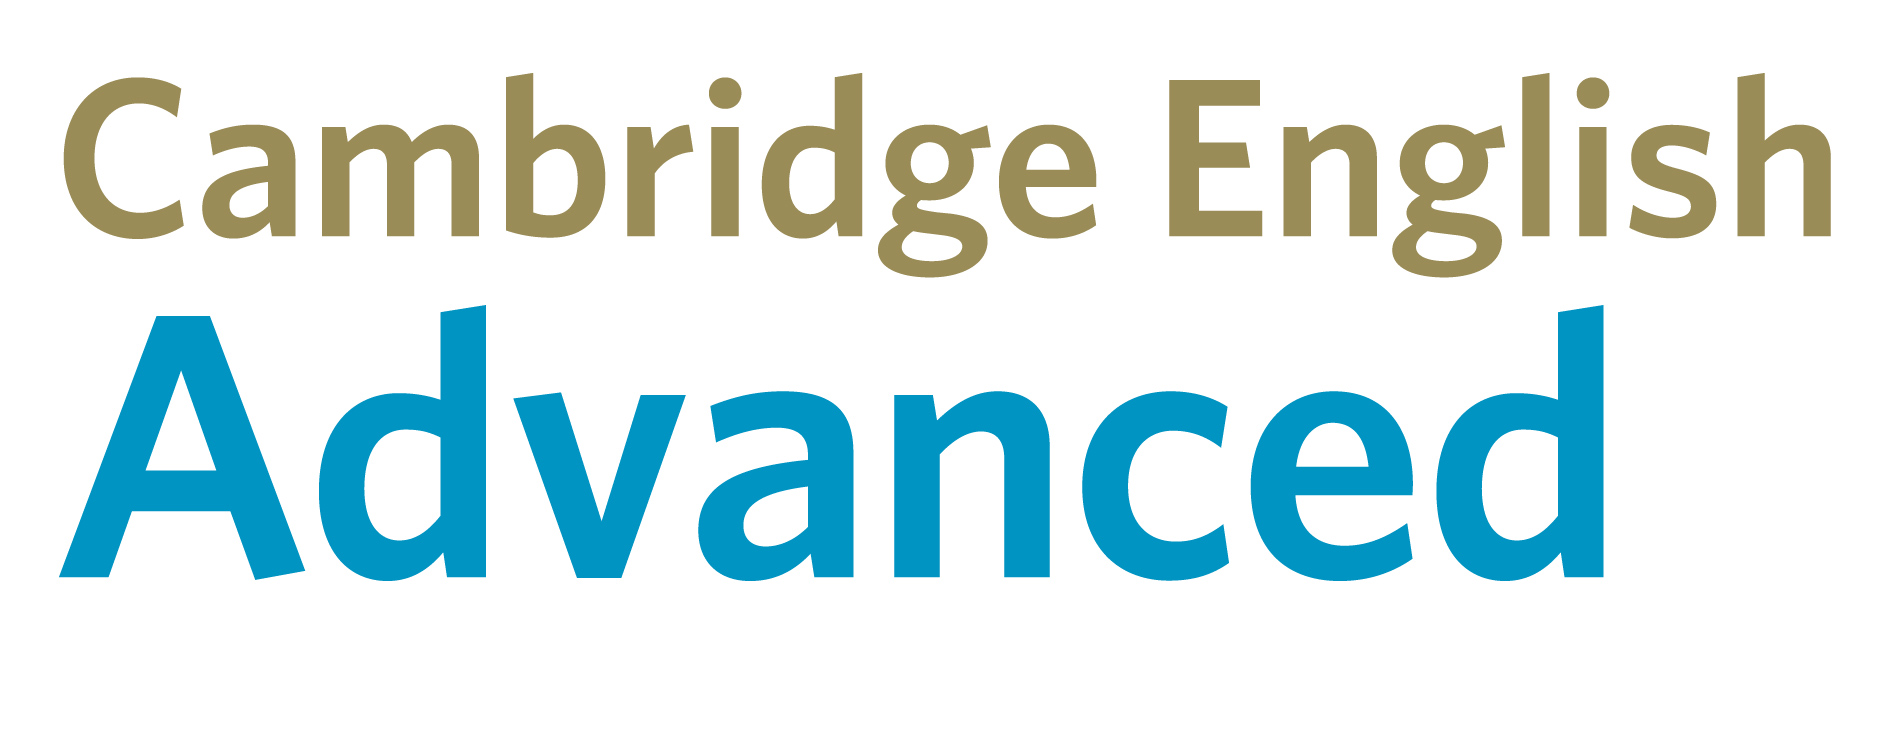 Cambridge English Advanced logo